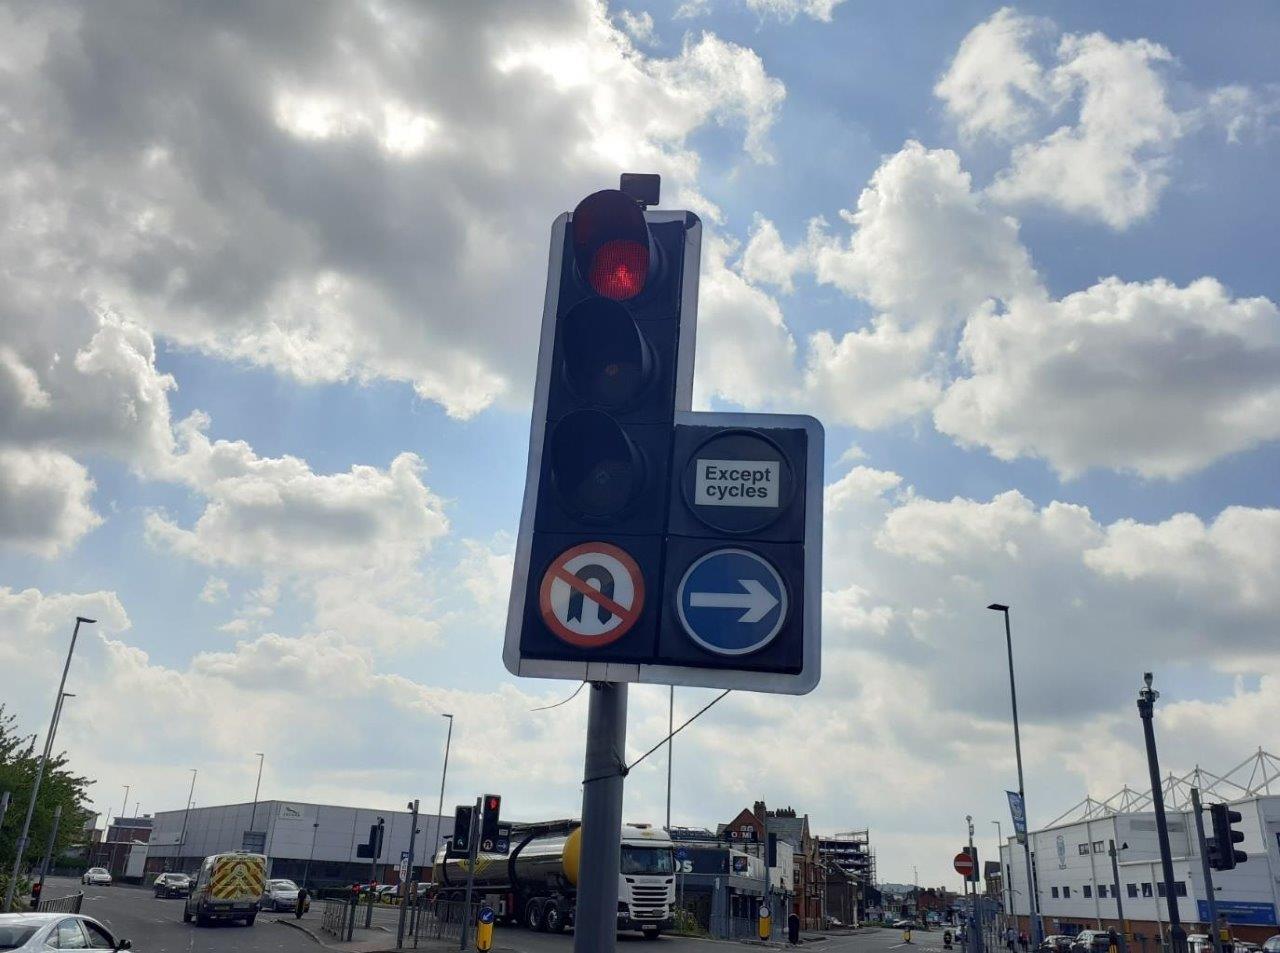 Winwick Road bus lane - Directional signage on traffic lights